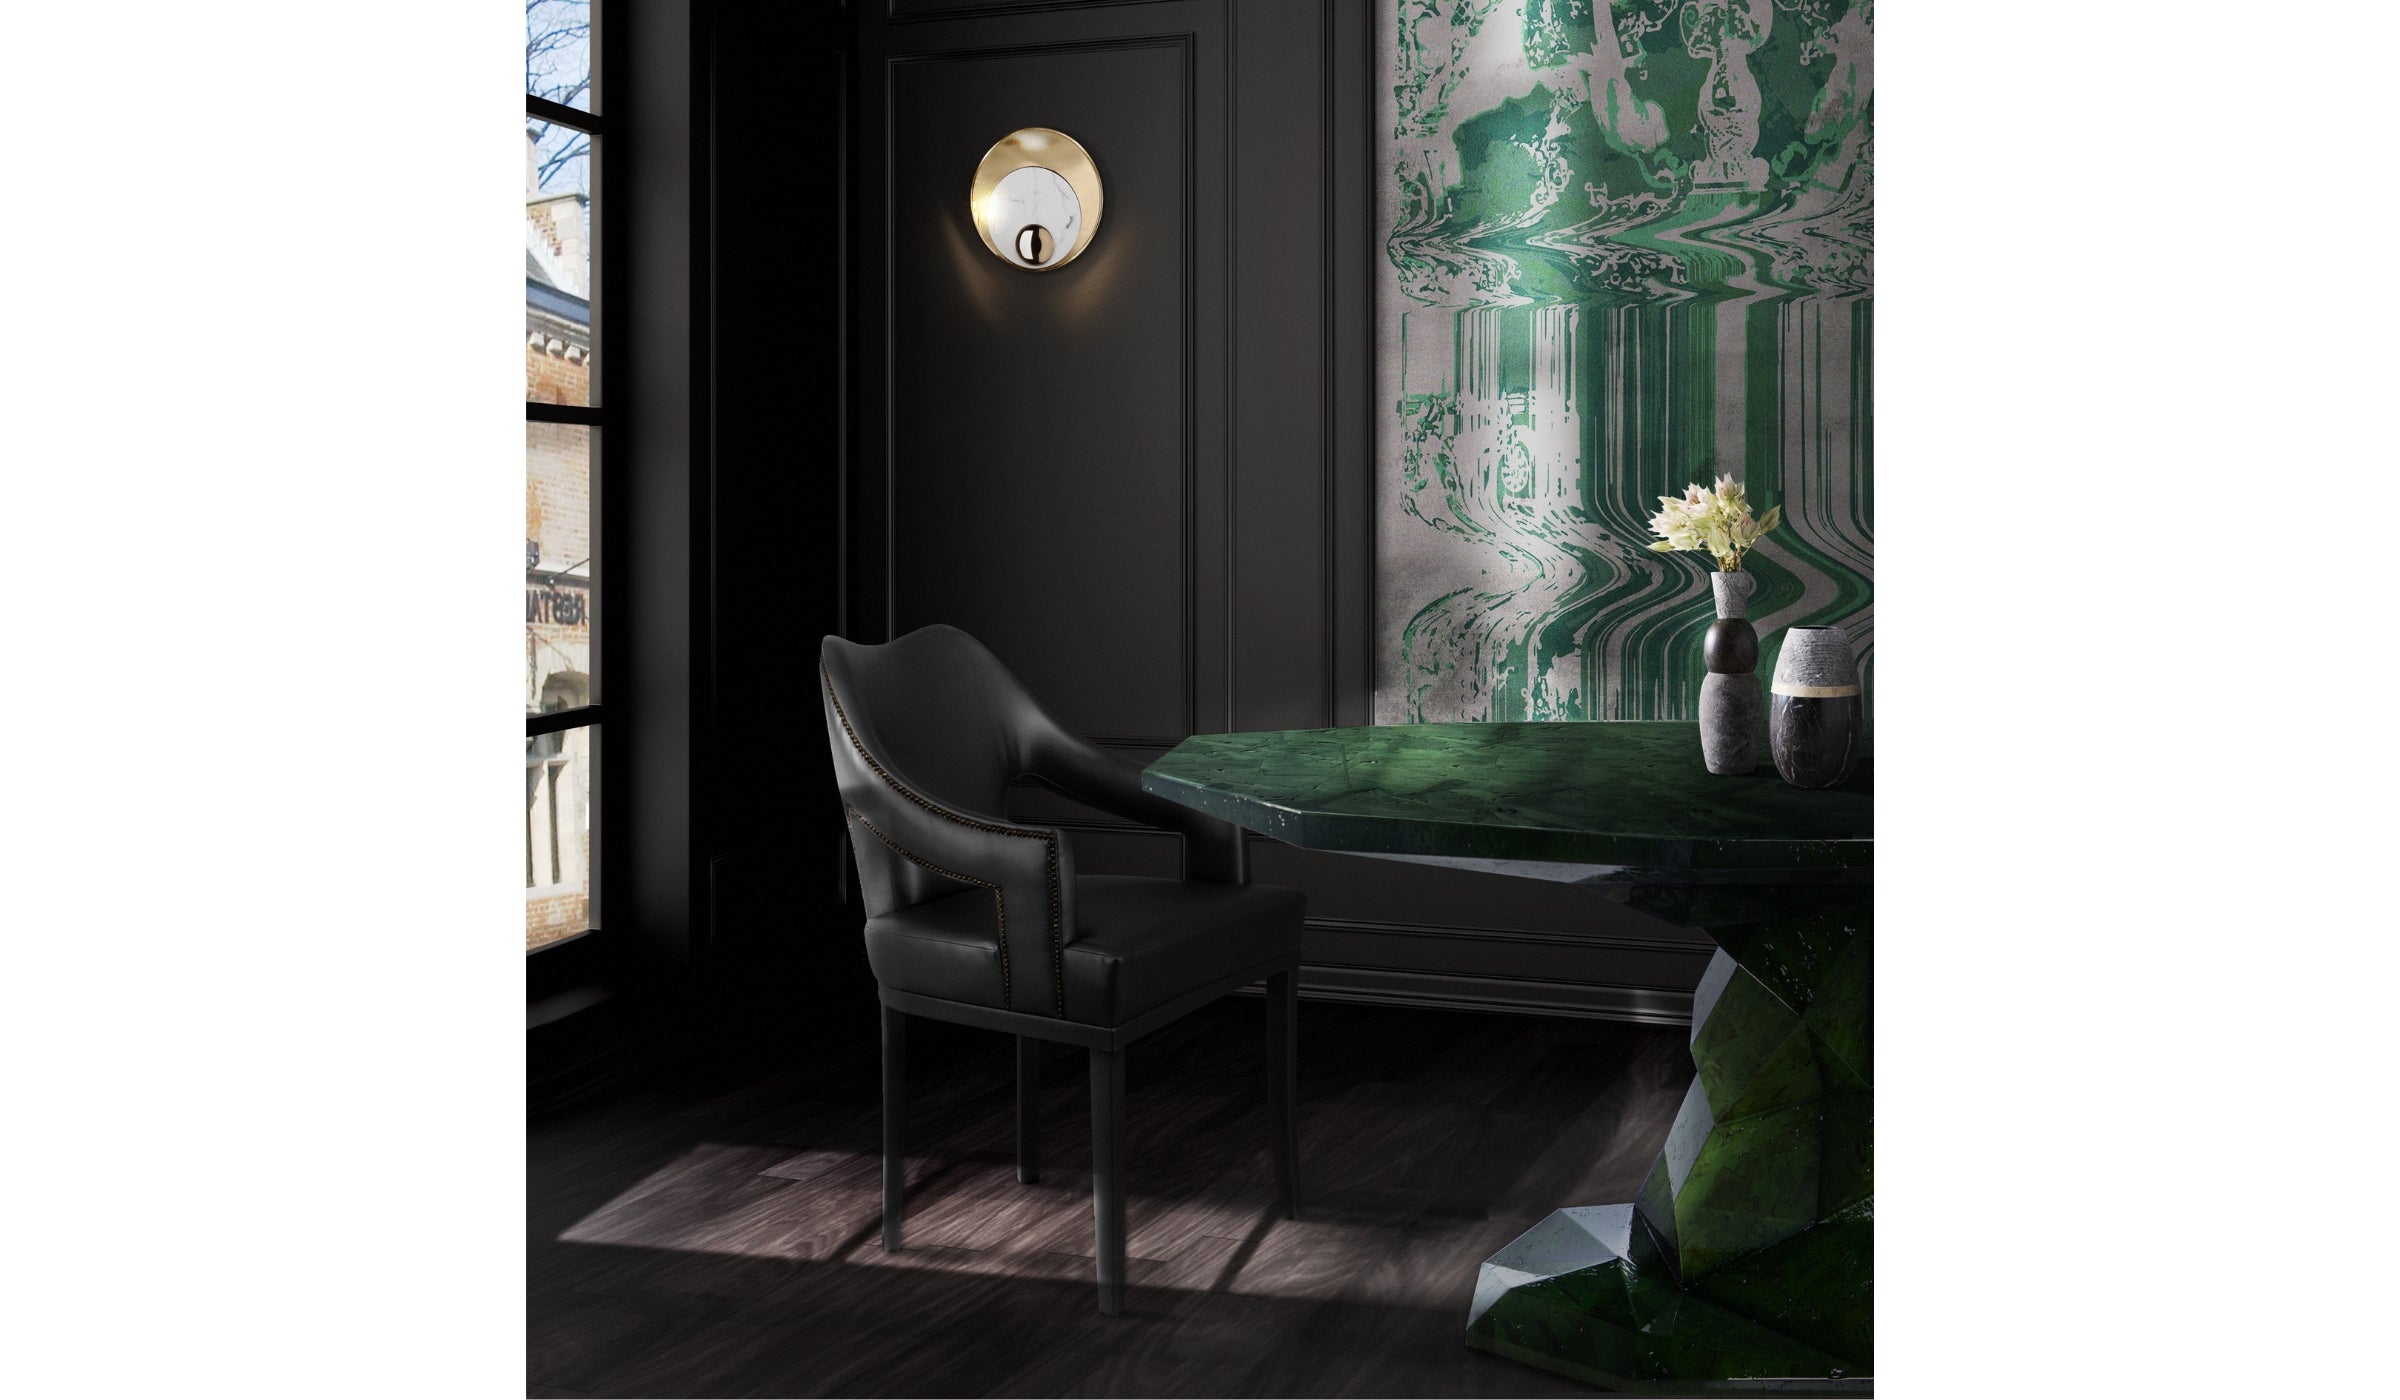 Bonsai Big - Modern design dining table with luxurious green mahogany finish